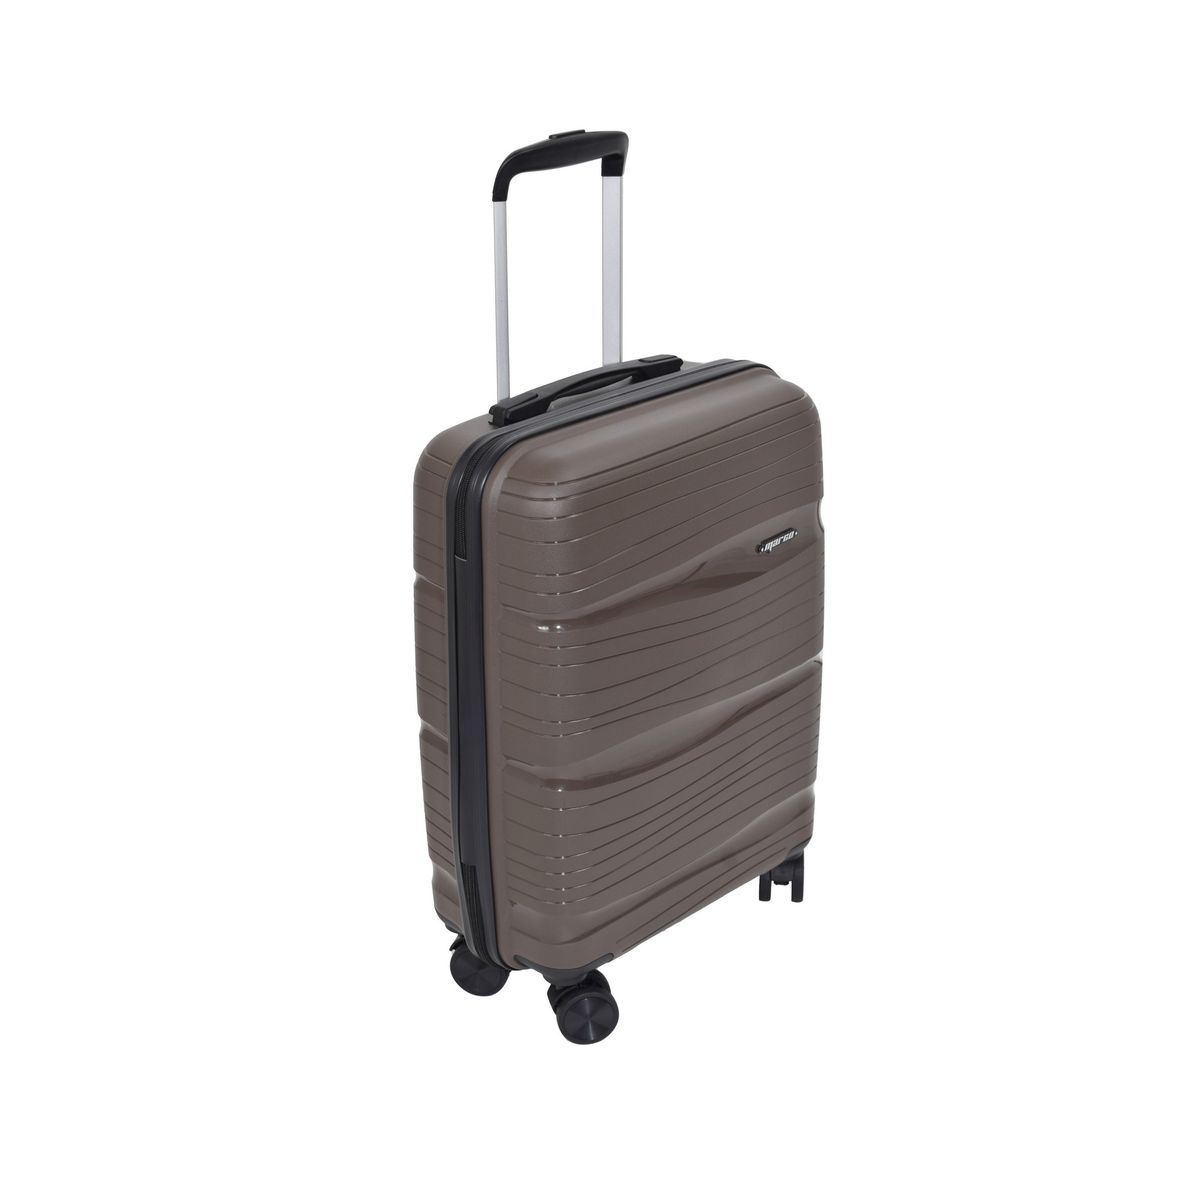 Marco Odyssey Polypropylene 20 inch Luggage Bag - Olive Brown | Shop ...